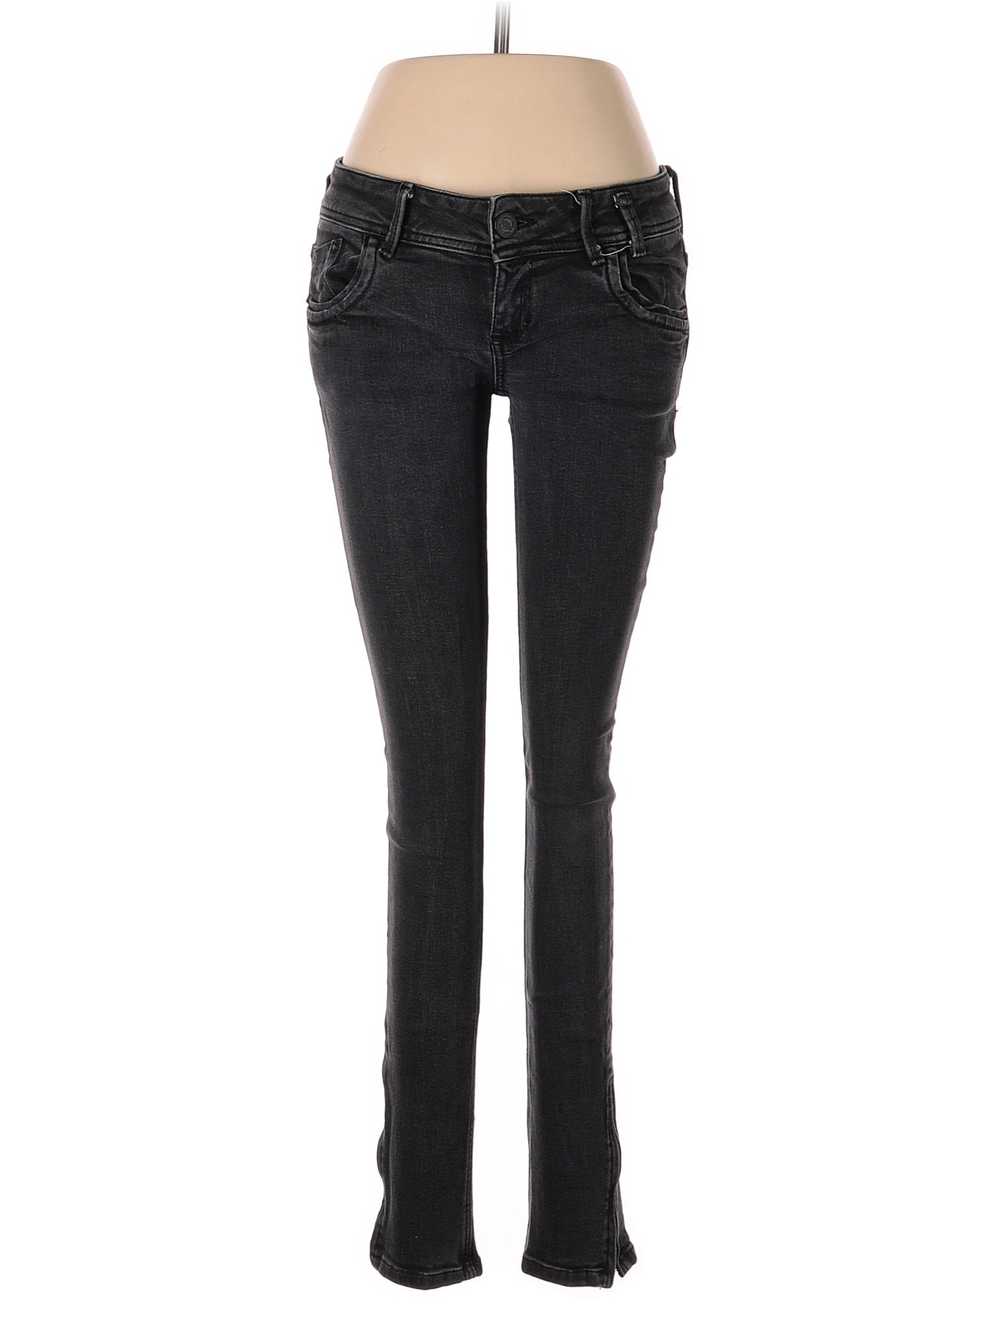 Trf Denim Rules Women Black Jeans 6 - image 1